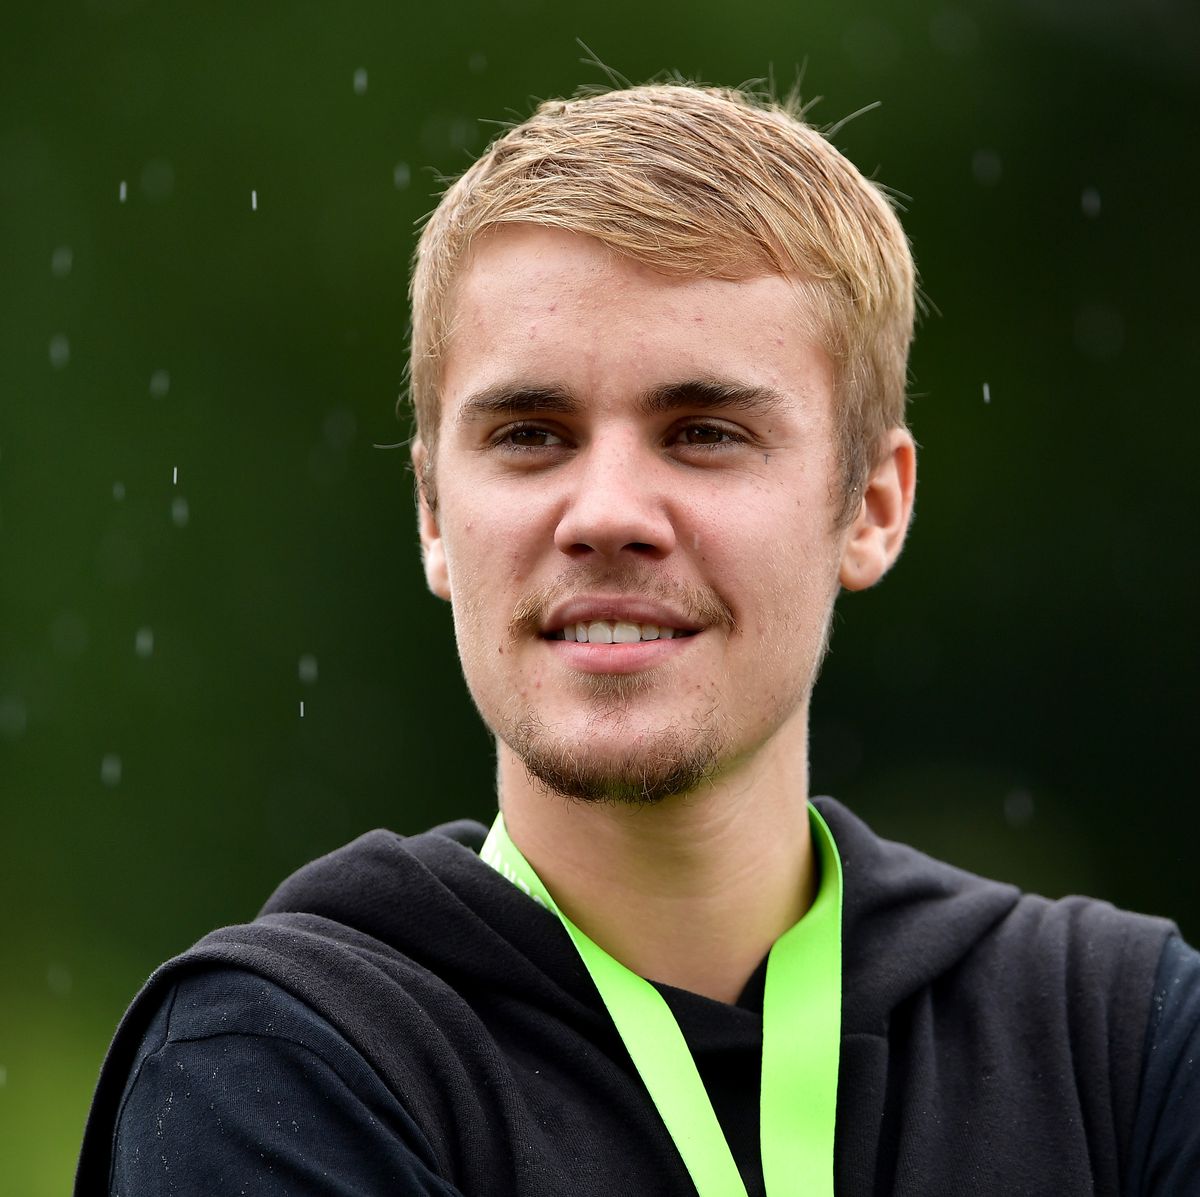 Justin Bieber's Drew House Fashion Line Released $5 Emoji Slippers